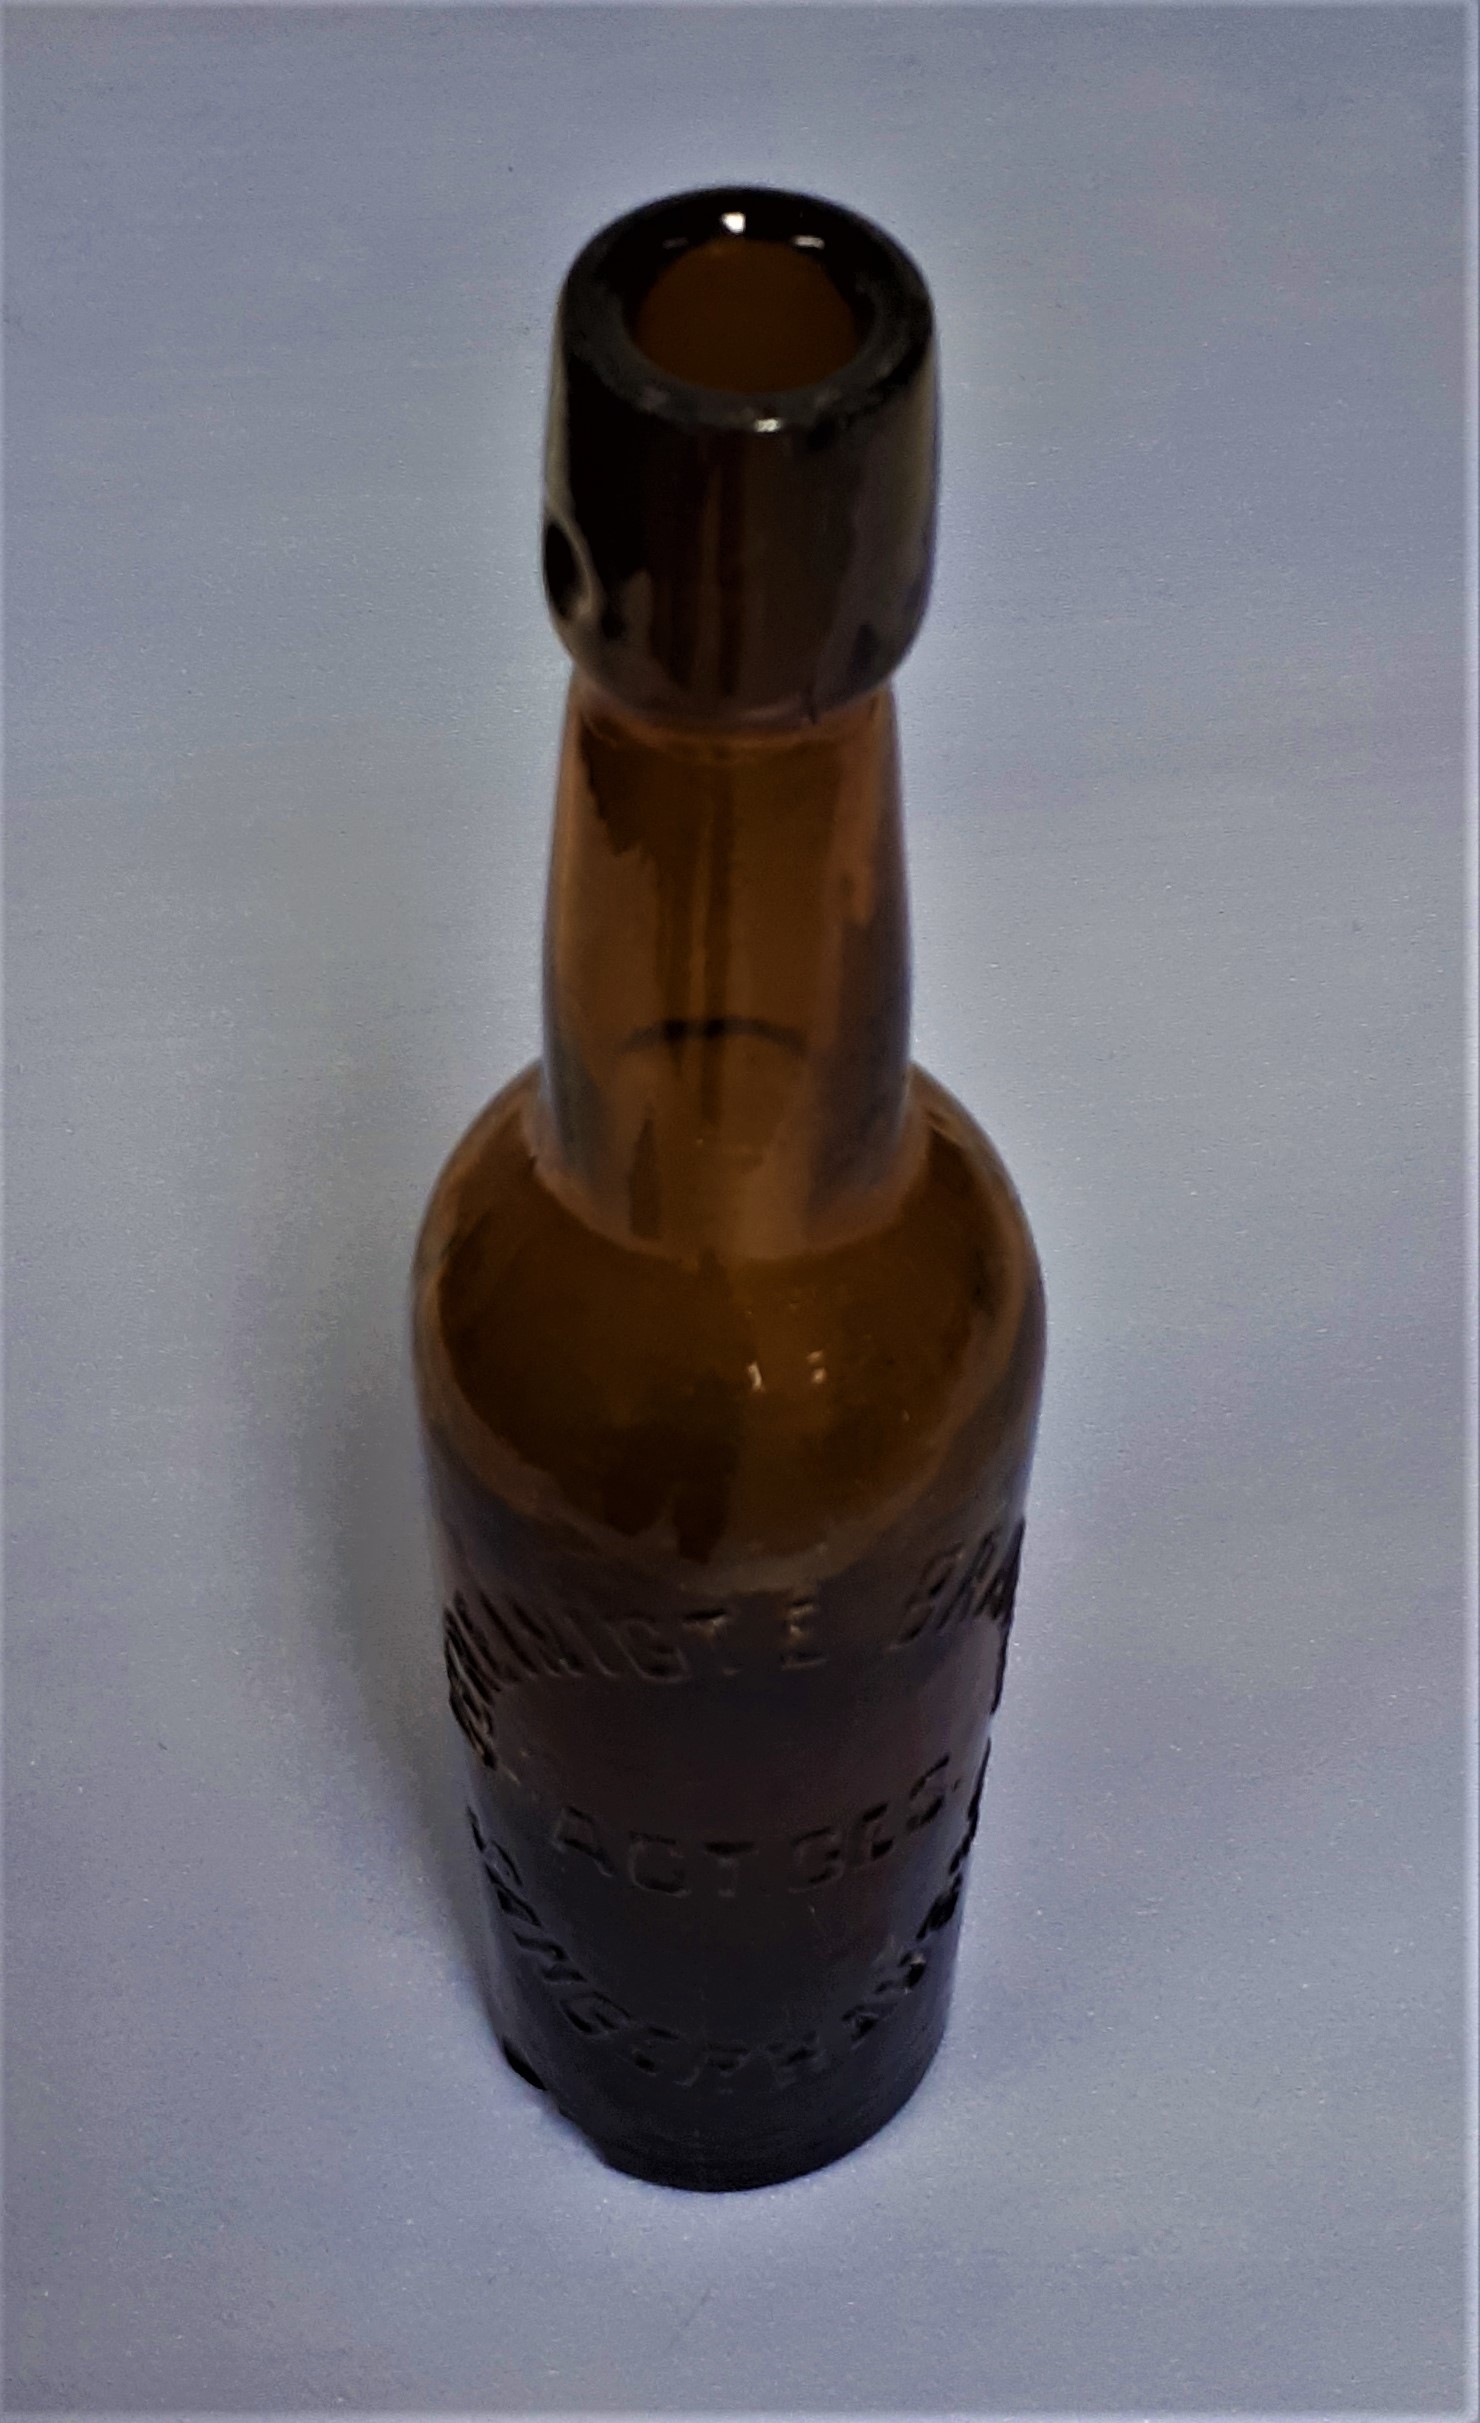 Glasflasche für Bier (Erlebniswelt Museen e. V. CC BY-NC-SA)